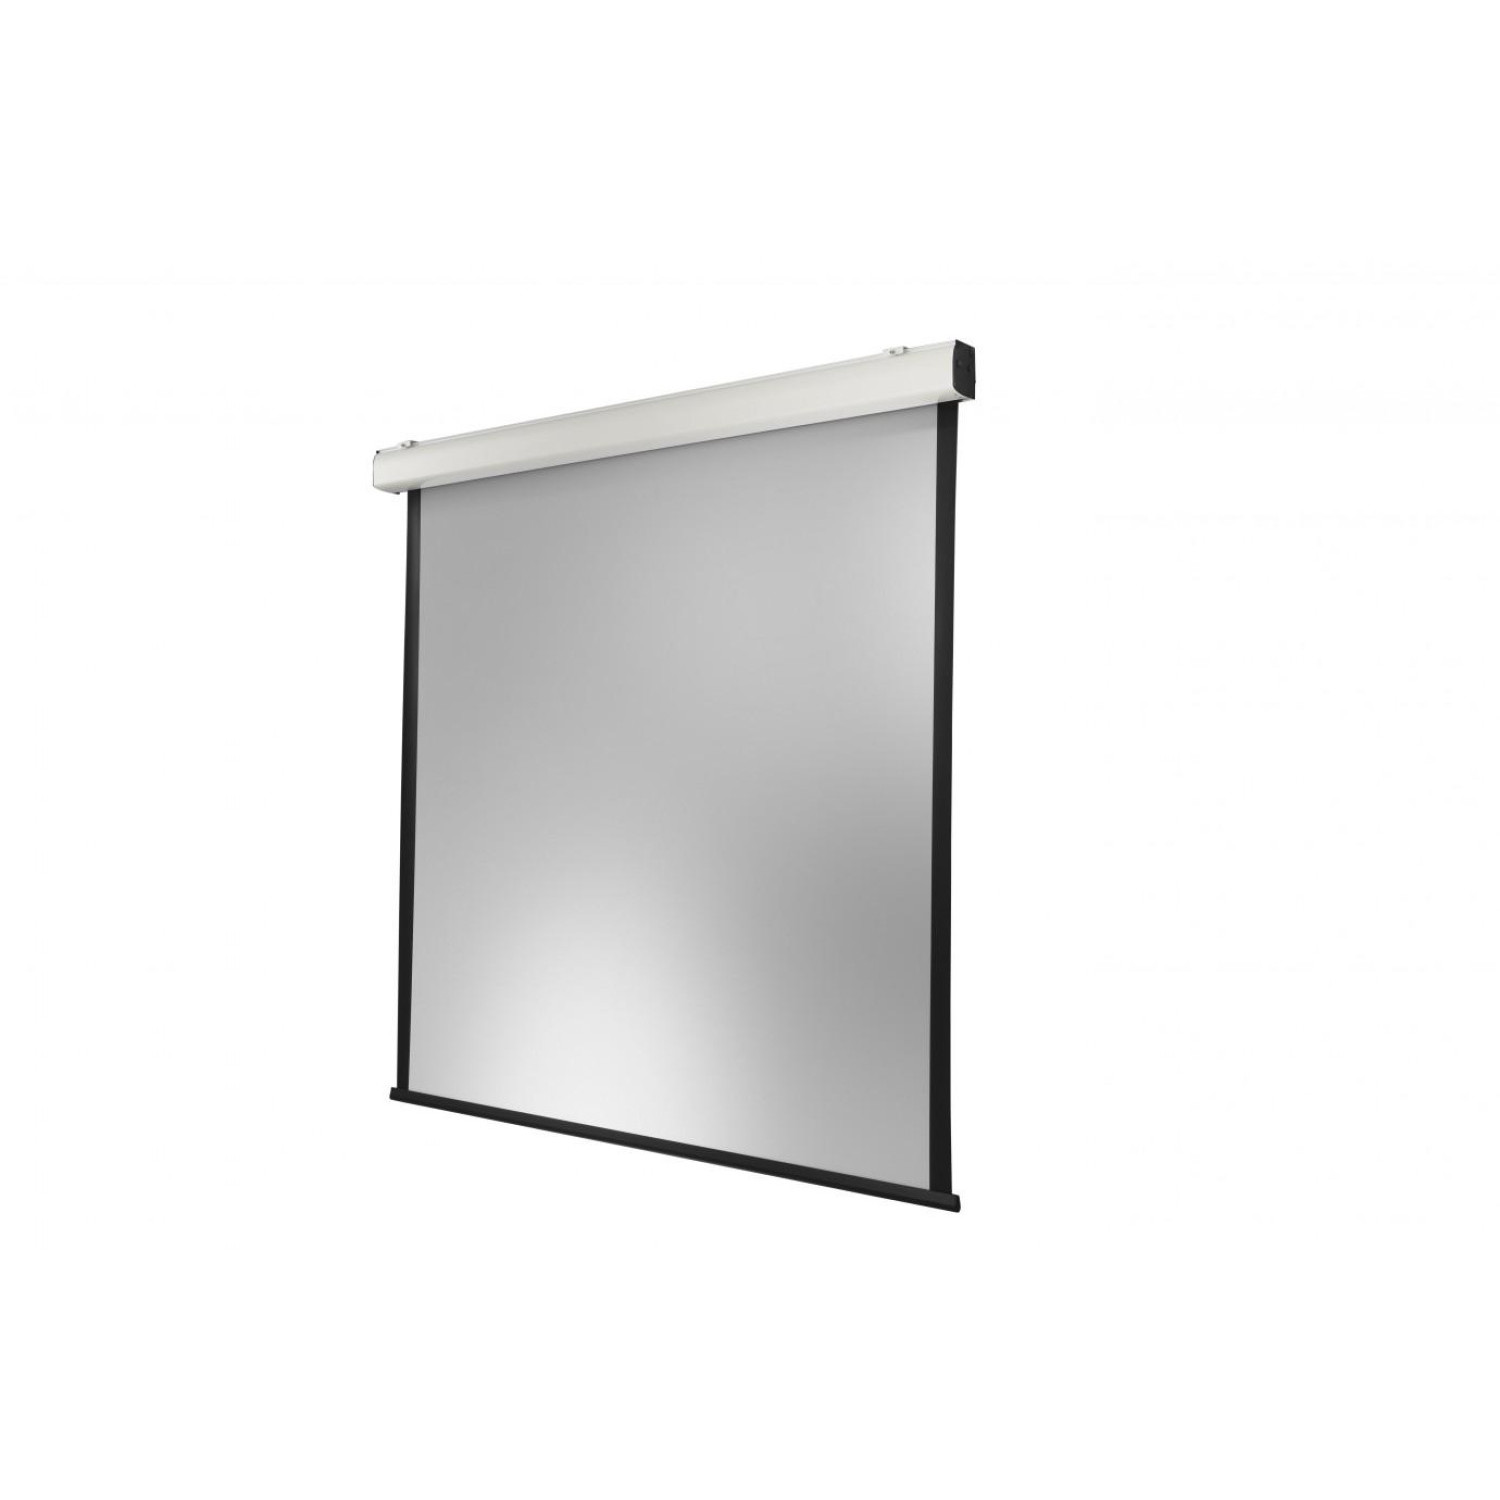 Електрически екран за стена CELEXON Electric Expert XL, 400 x 250 cm, 16:10, matt white, PVC